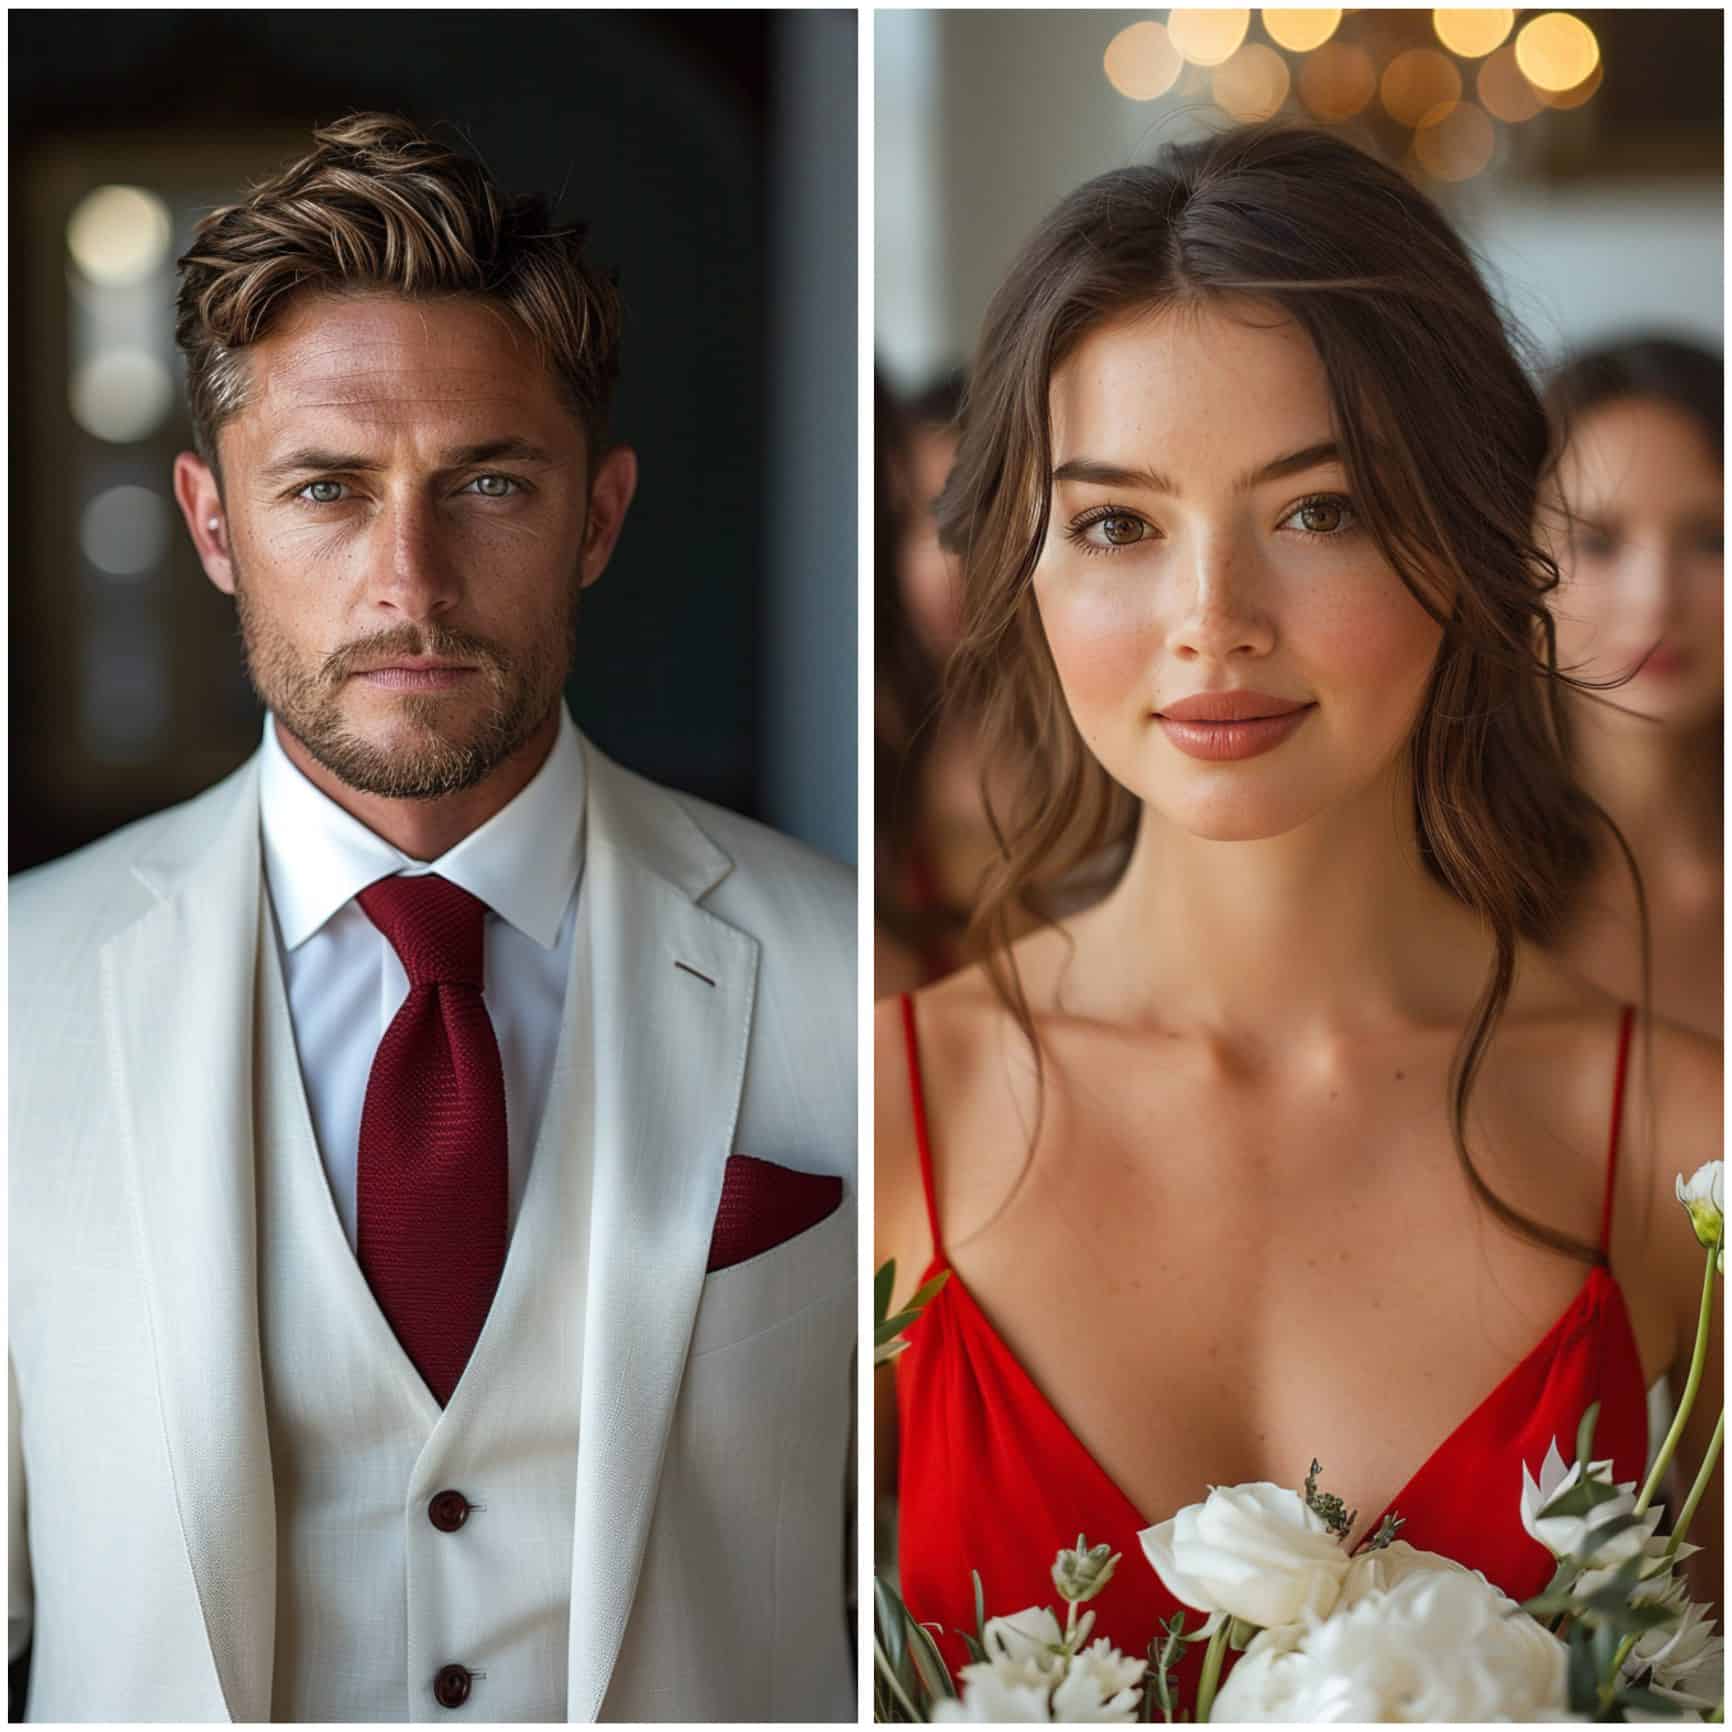 red and white wedding attire